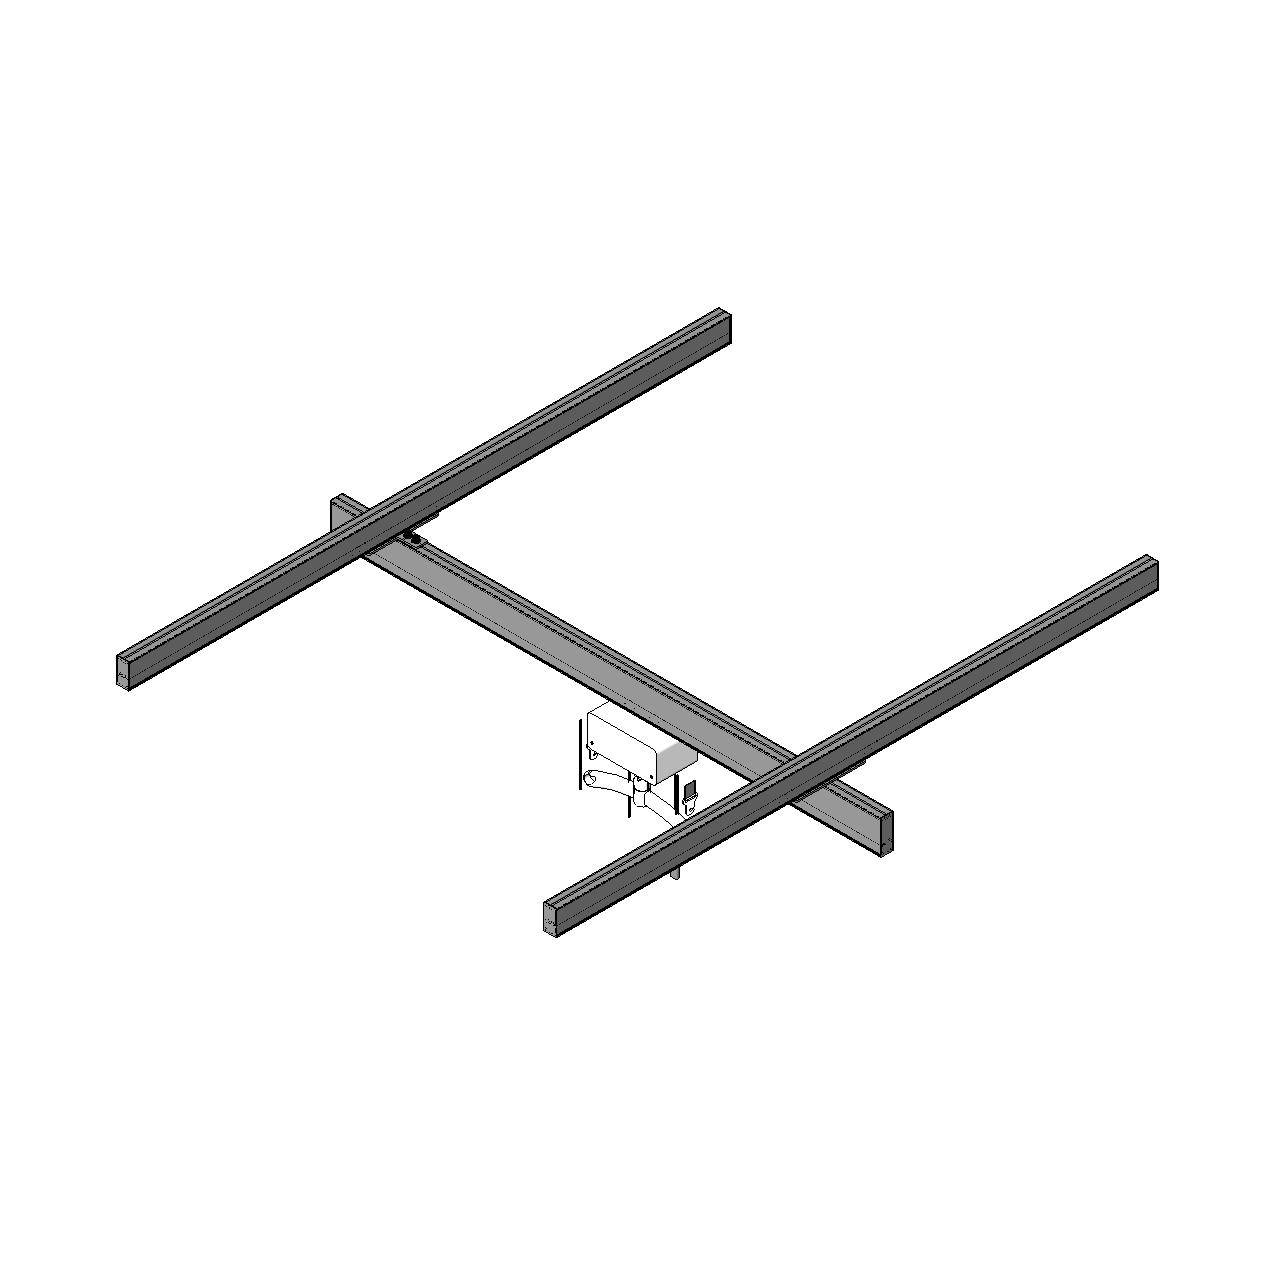 Ceiling Track Hoist - System Type H